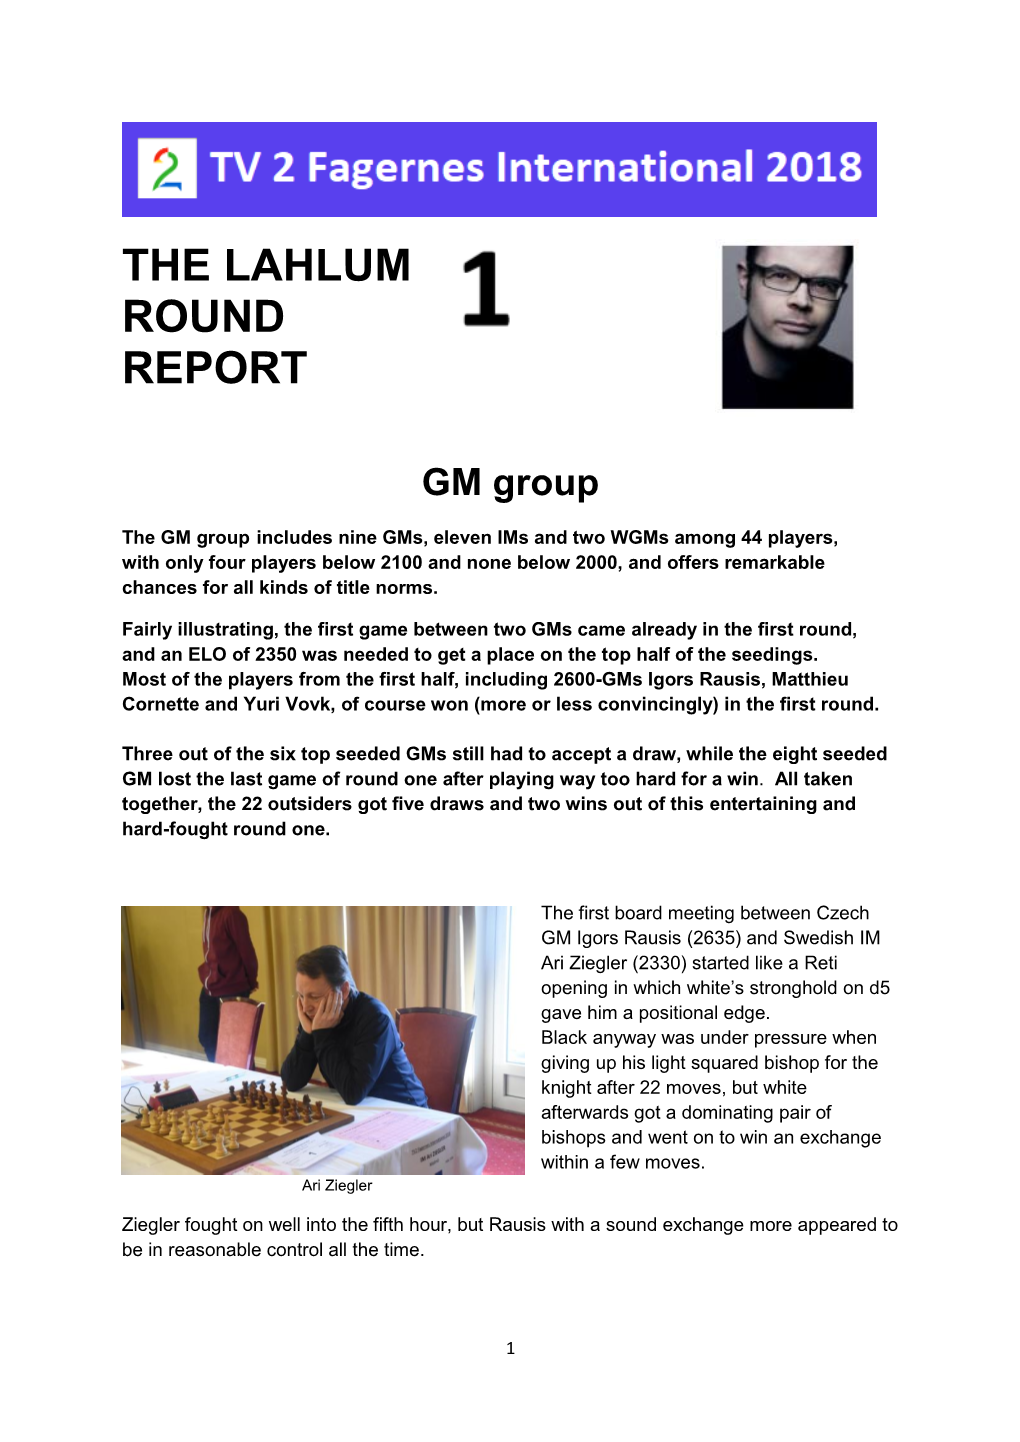 The Lahlum Round Report